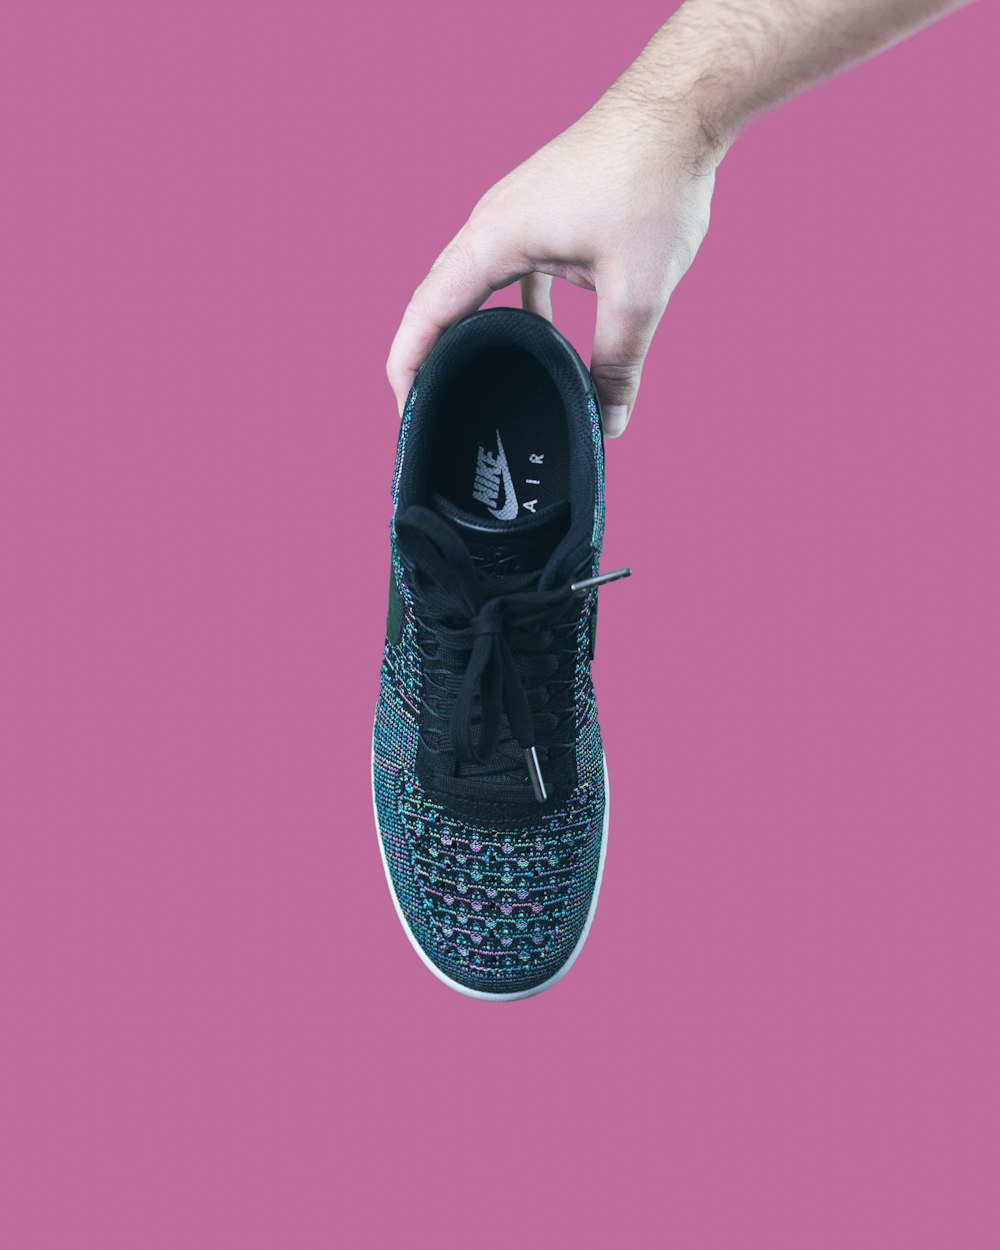 unpaired black Nike sneaker